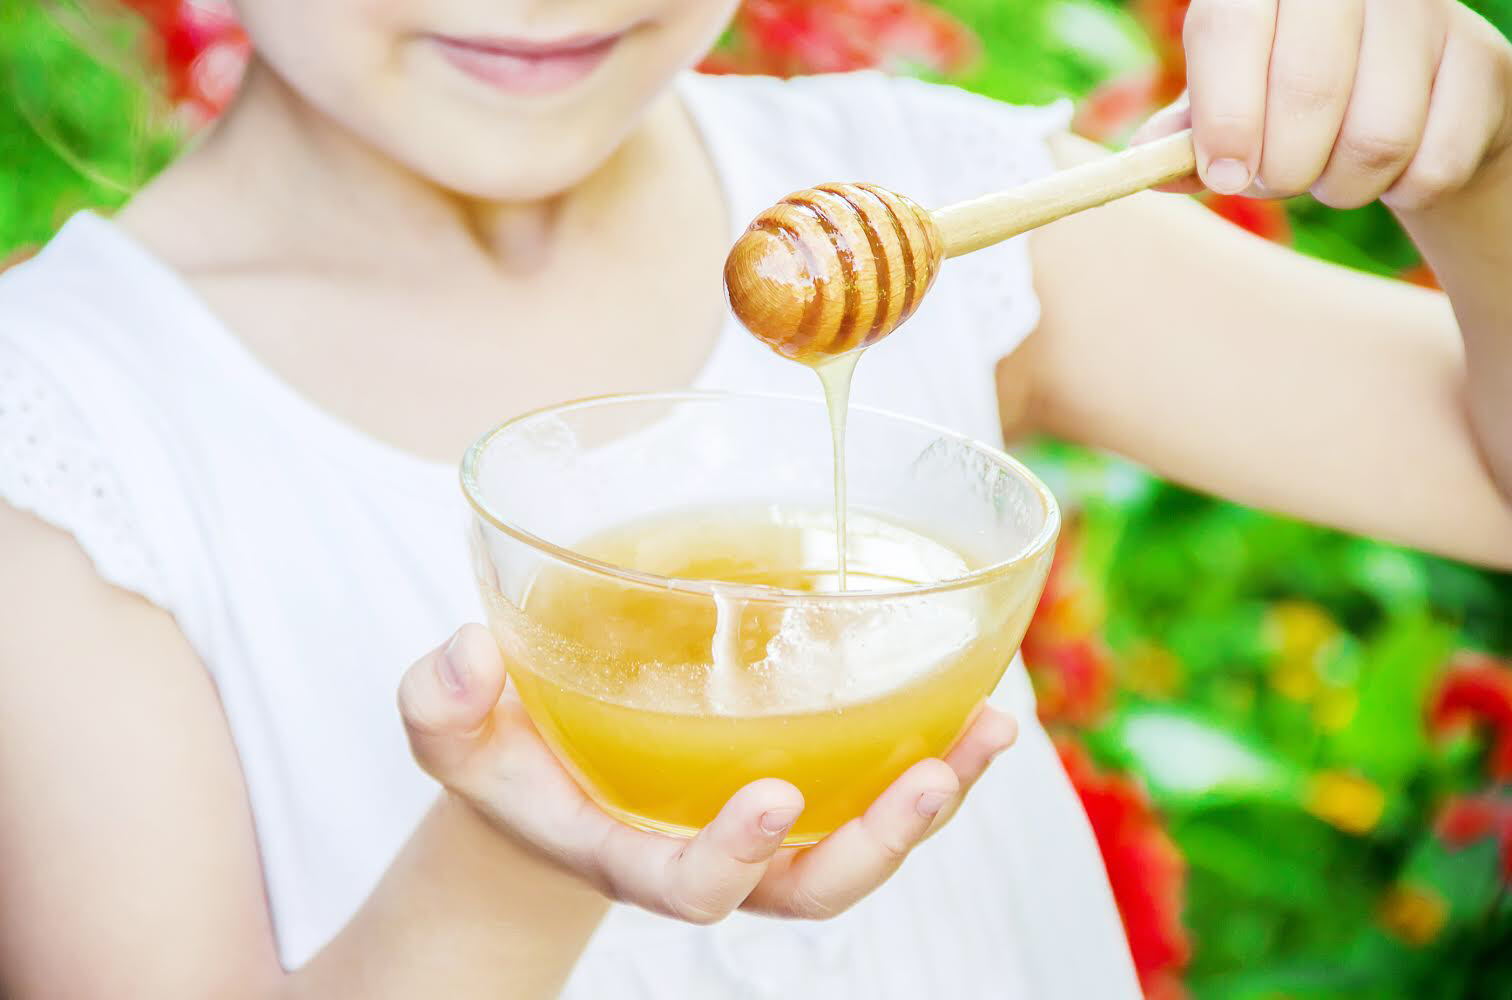 Miele: no per i bambini